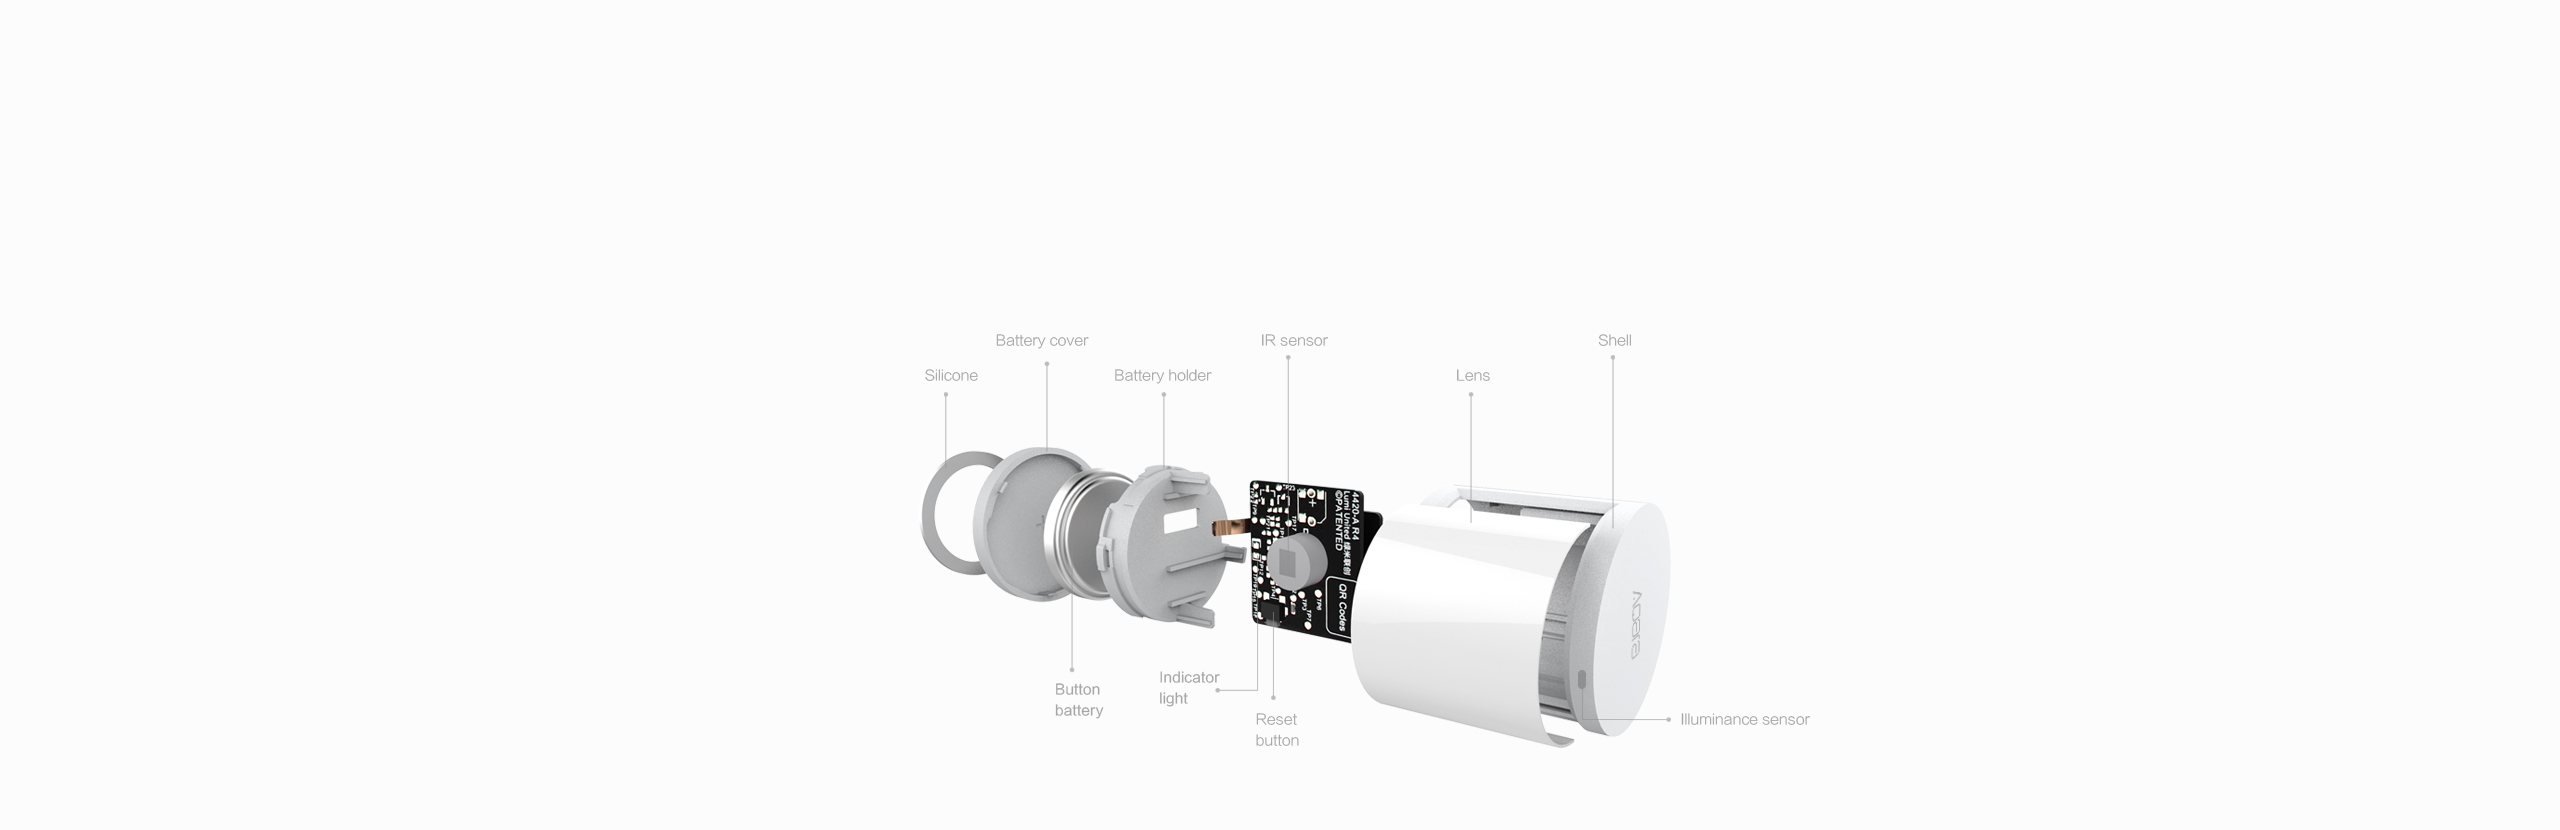 aqara wireless smart motion sensor details